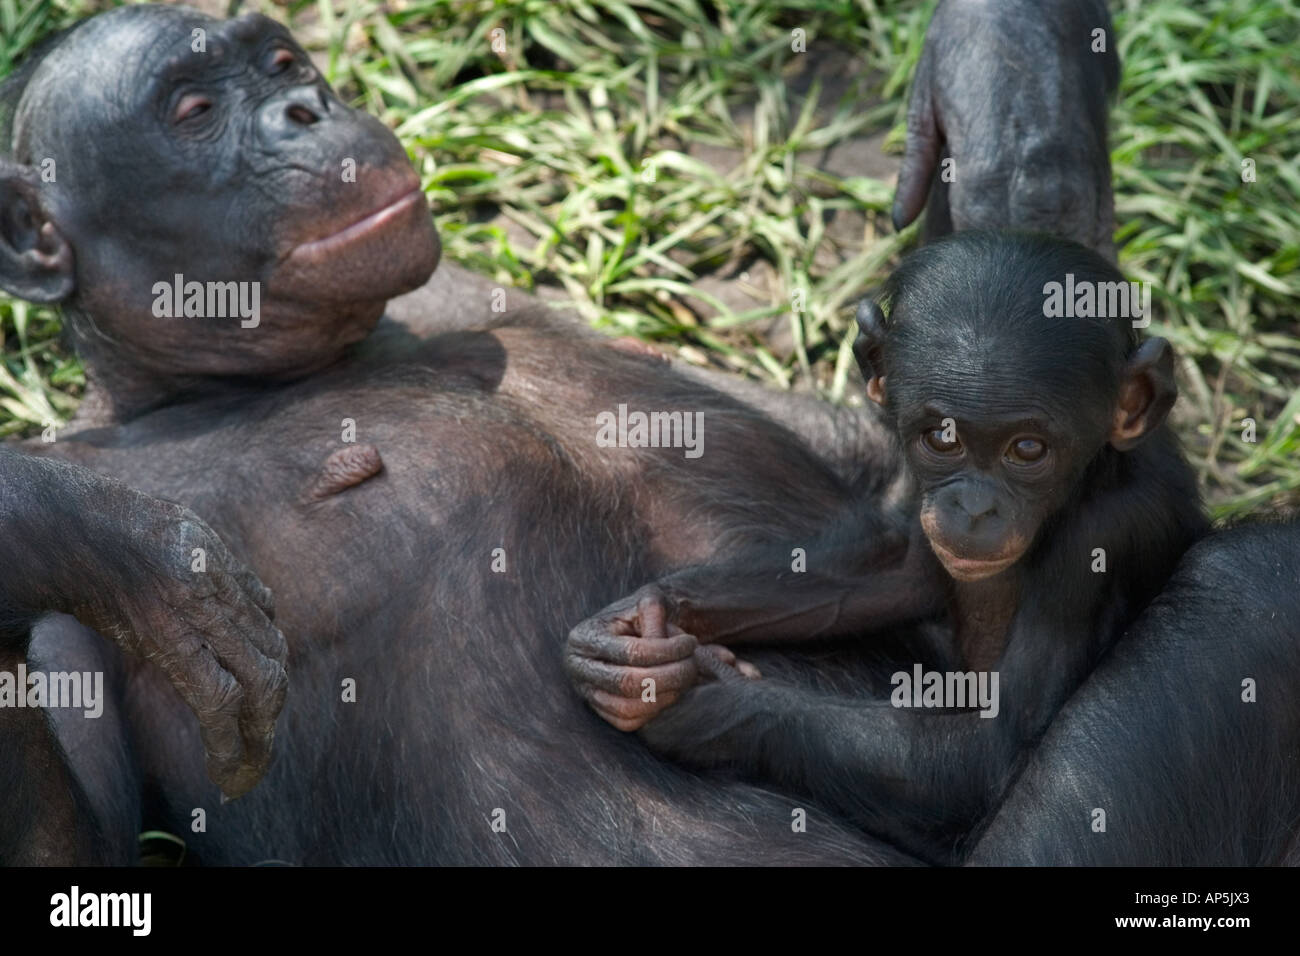 USA, Florida, Jacksonville Zoo, Bonobo chimpanzee with baby, Pan paniscus Stock Photo